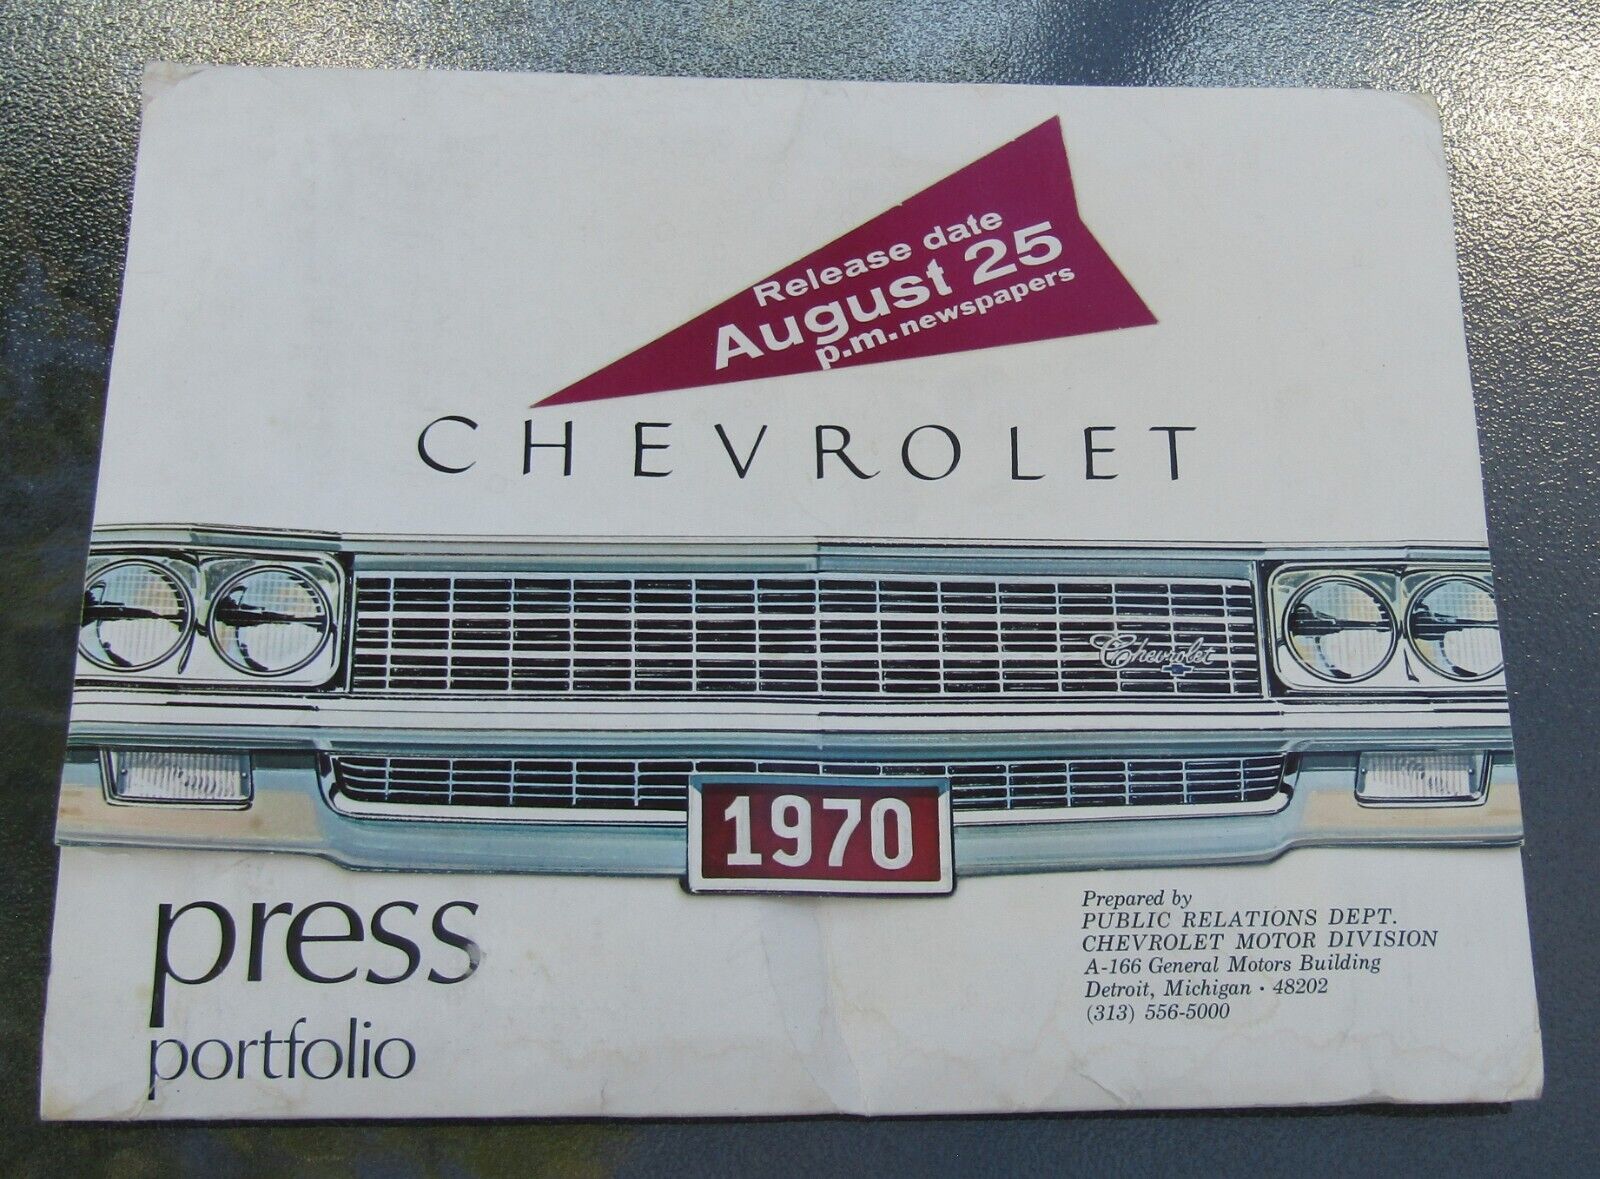 1970 Chevrolet Press Portfolio Introducing The New And Distinctive MONTE CARLO